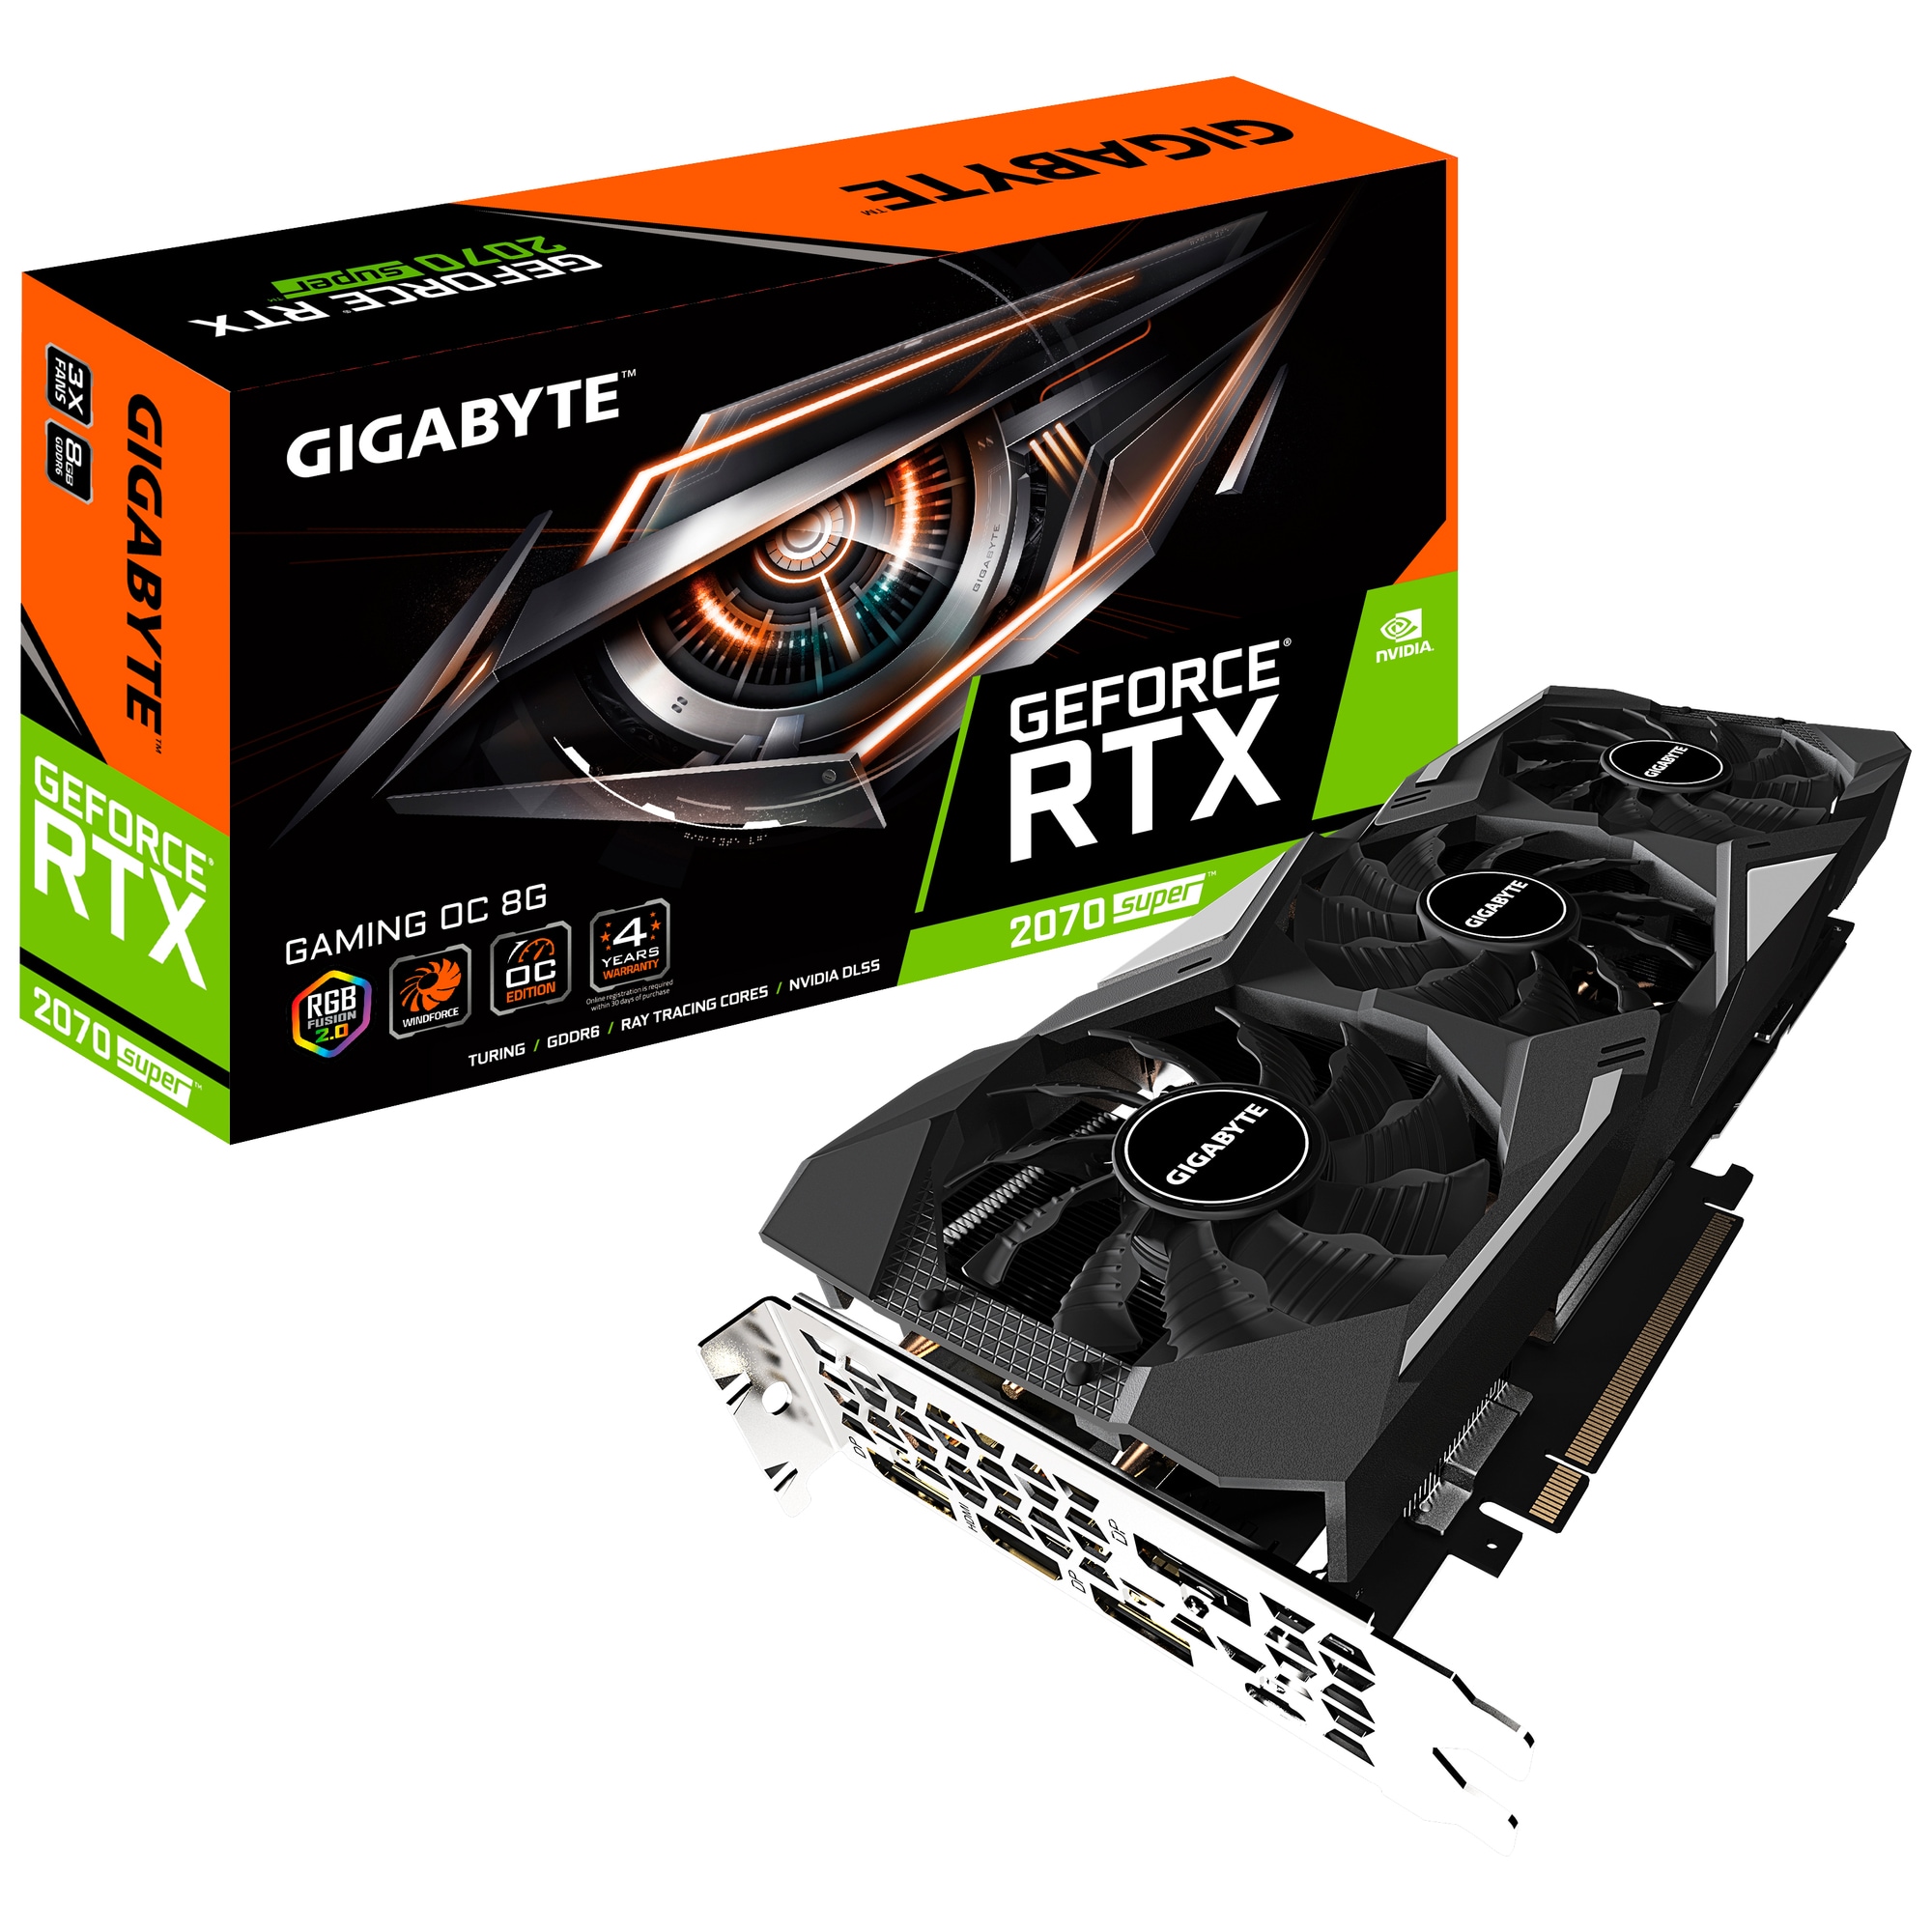 Gigabyte GeForce RTX 2070 Super Gaming OC grafikkort 8G | Elgiganten